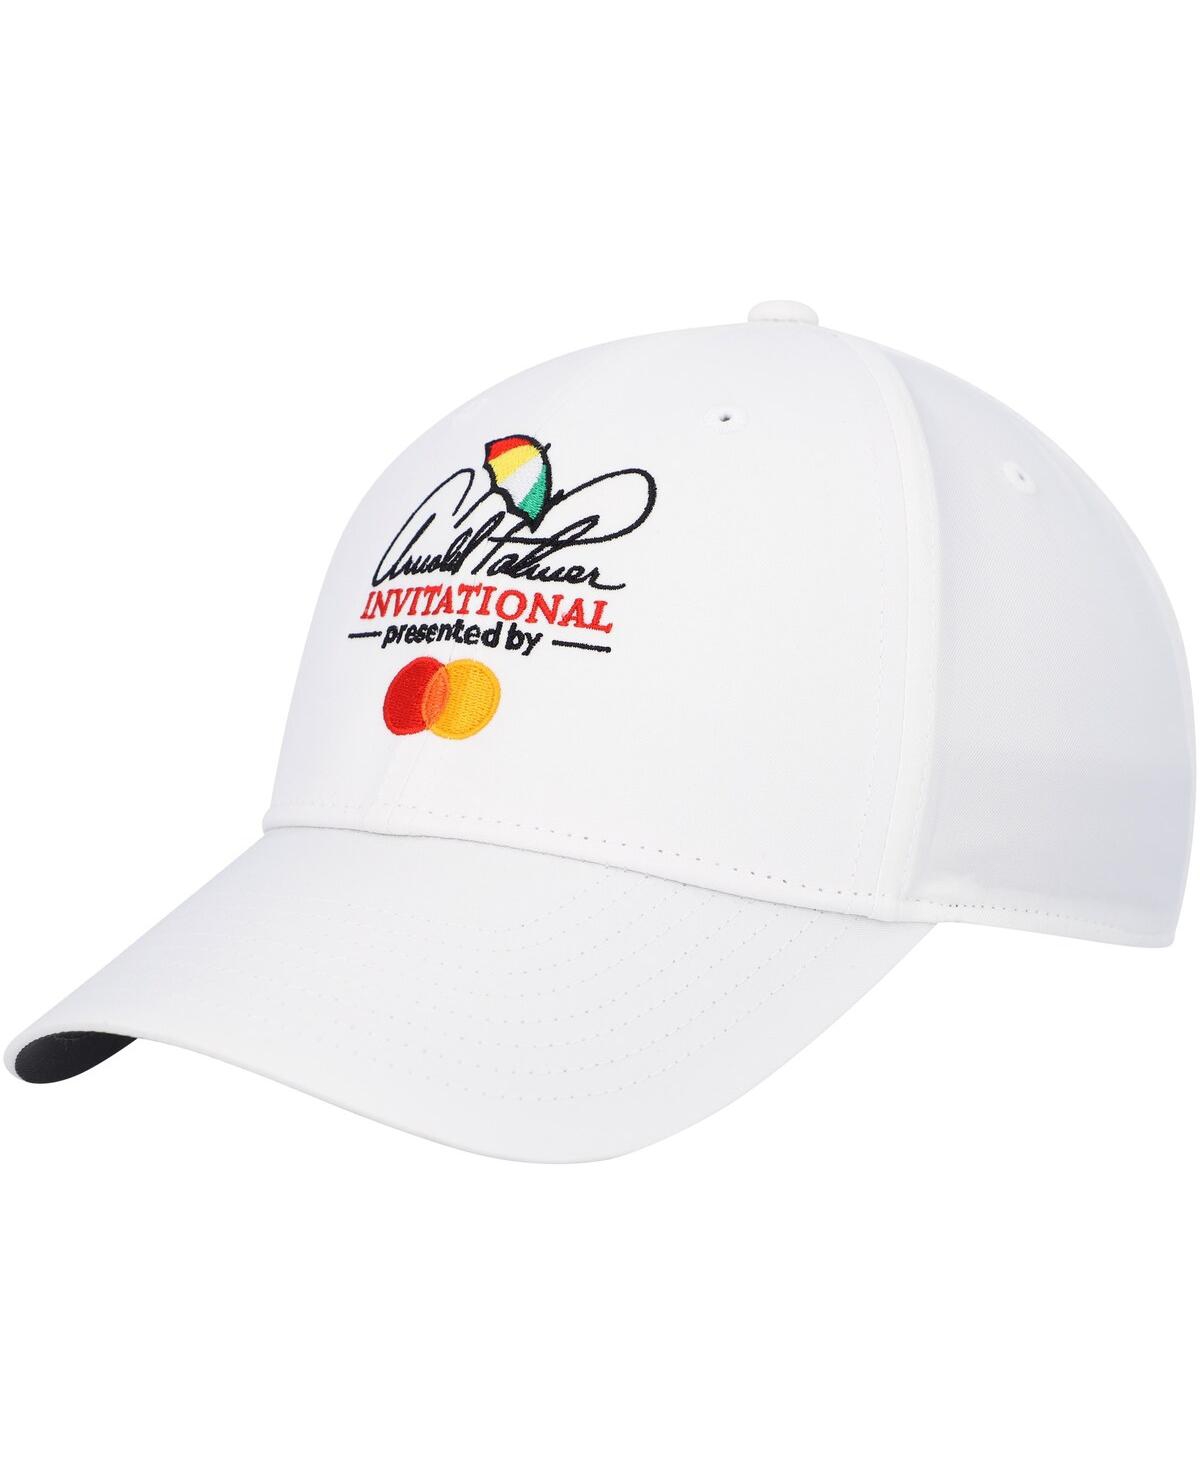 Men's Nike Golf White ClubÂ Performance Adjustable Hat - White